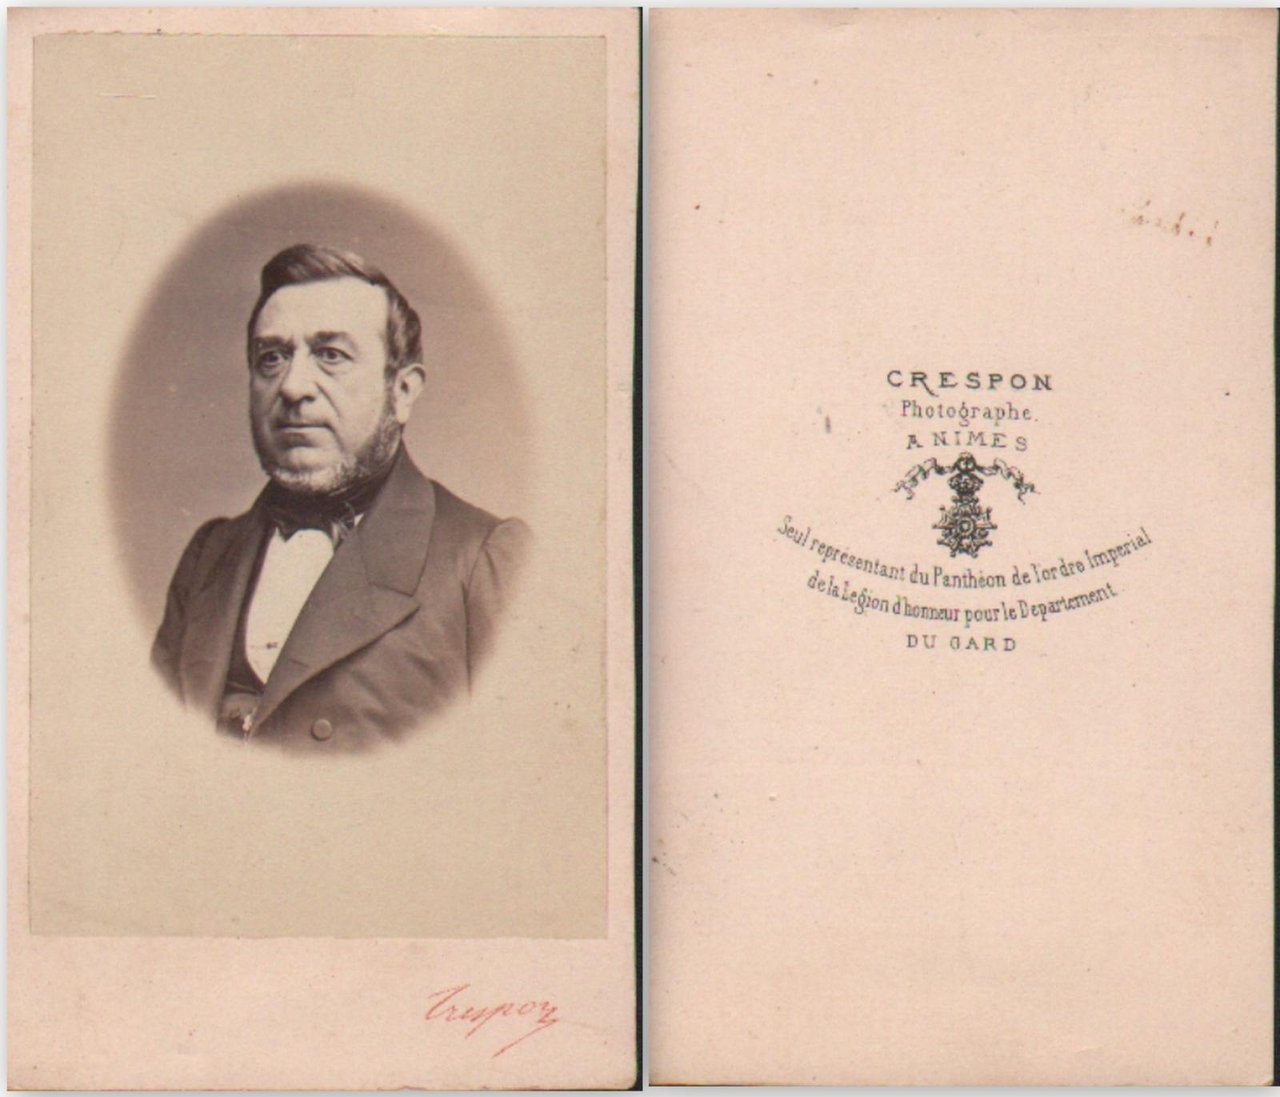 Foto photo gentiluomo in ovale by Crespon Nimes cdv 1880 …